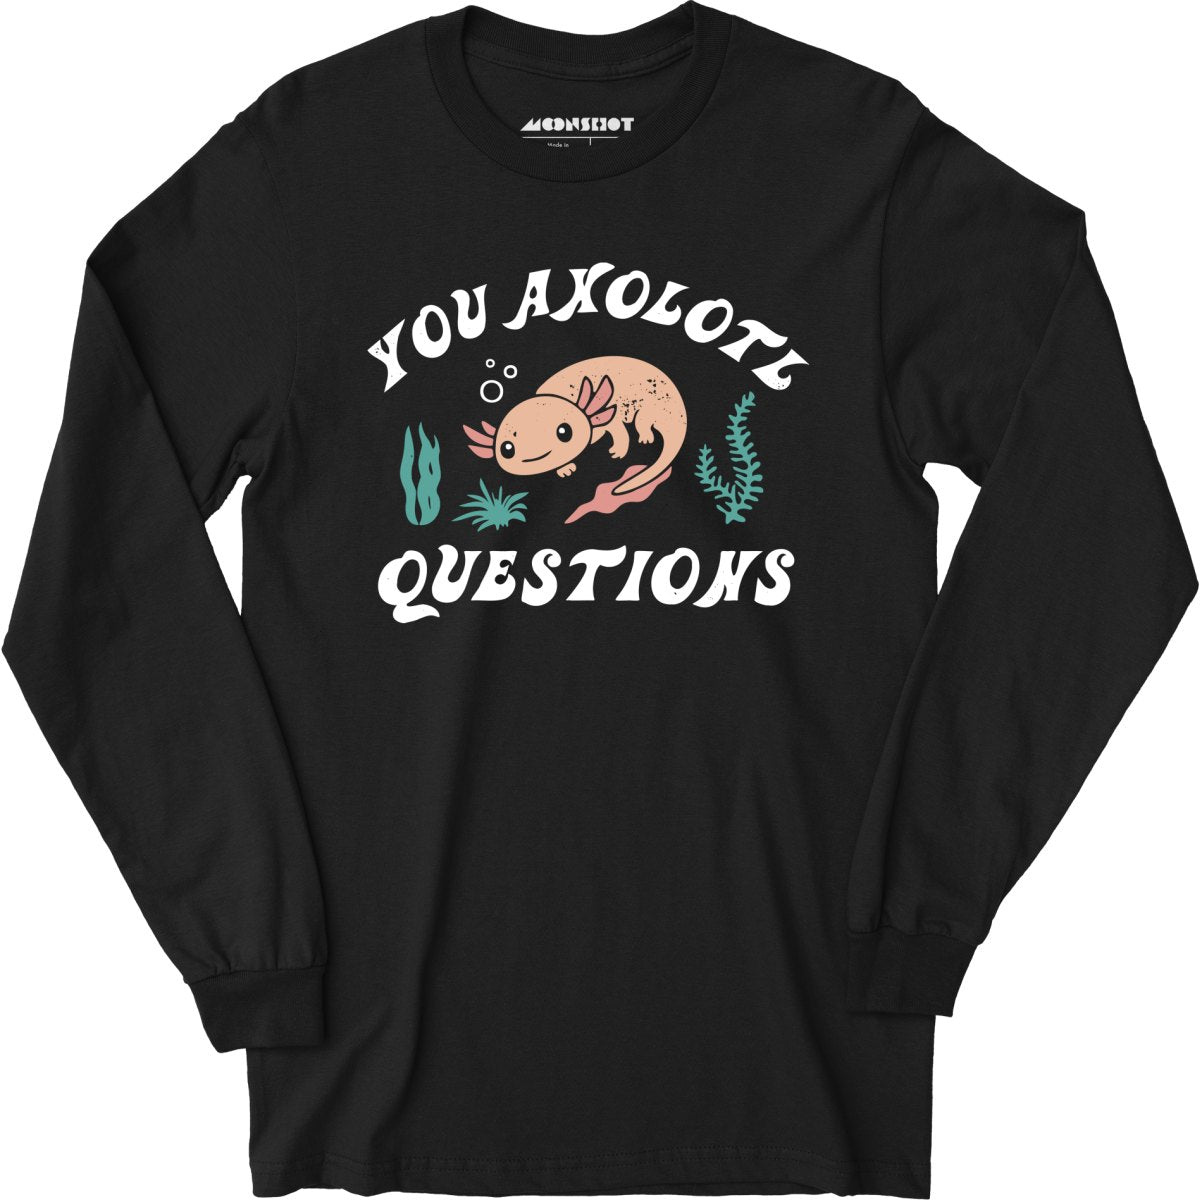 You Axolotl Questions - Long Sleeve T-Shirt